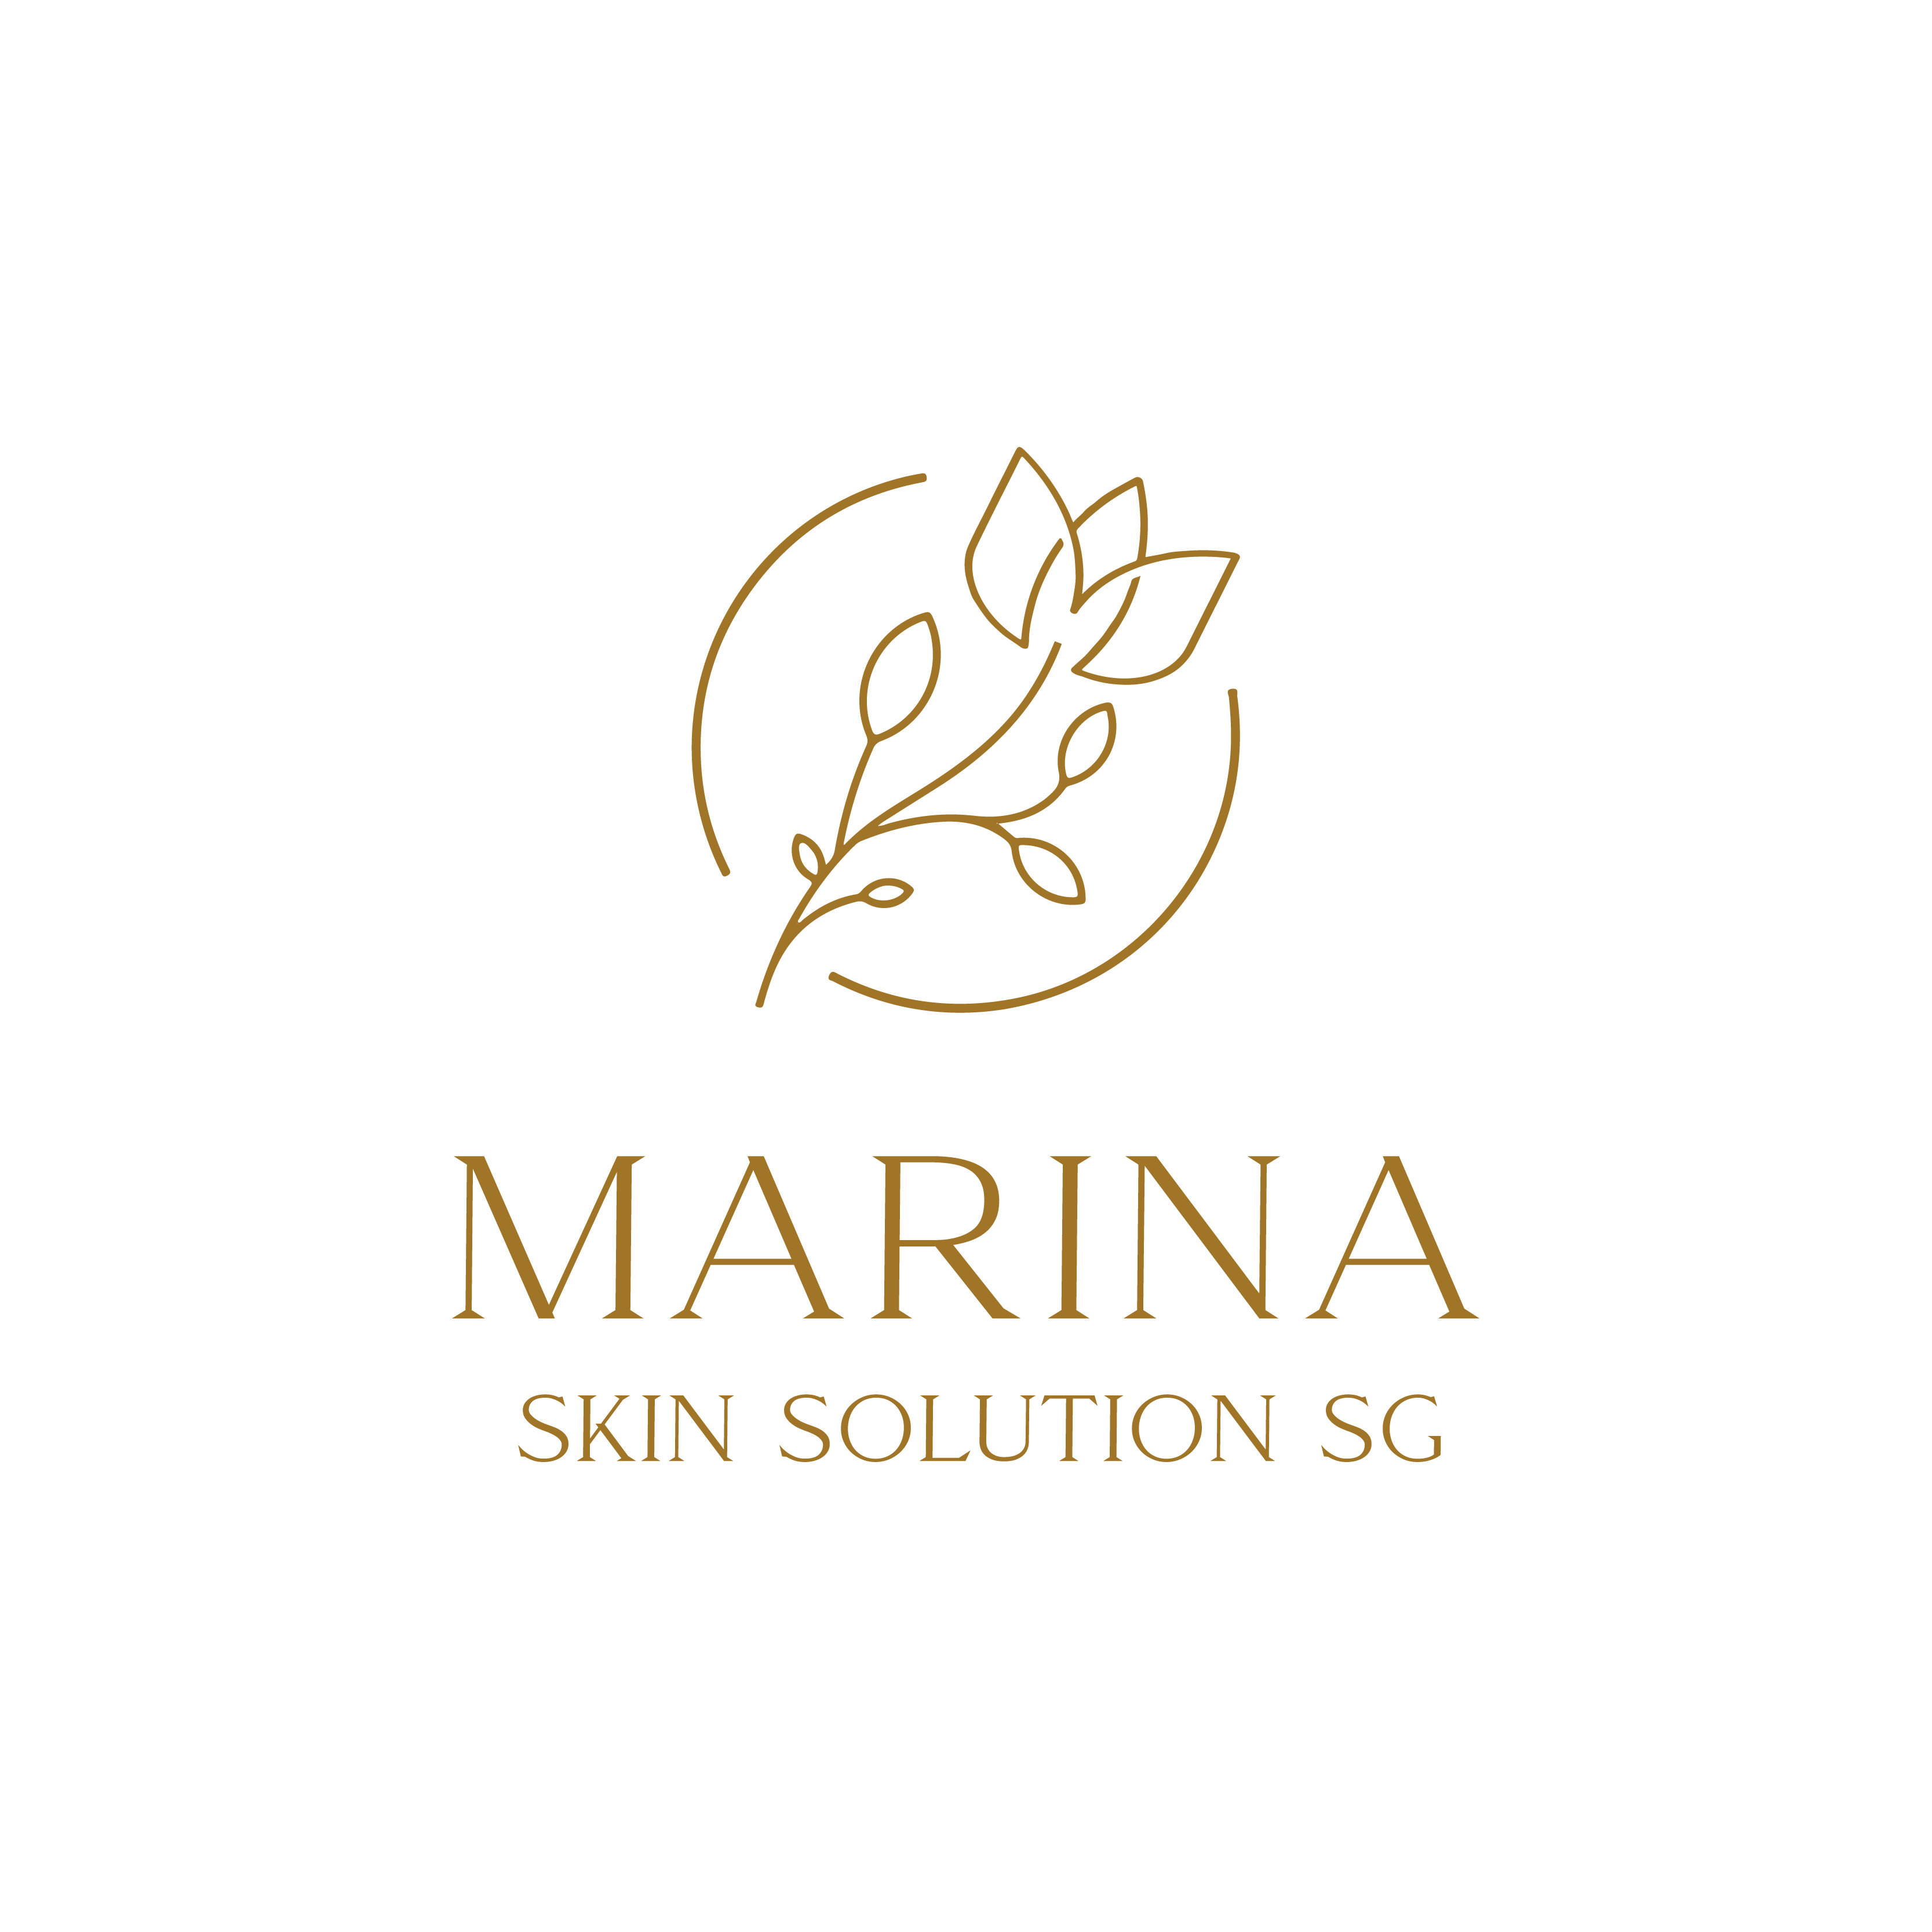 MARINA SKIN SOLUTION SG